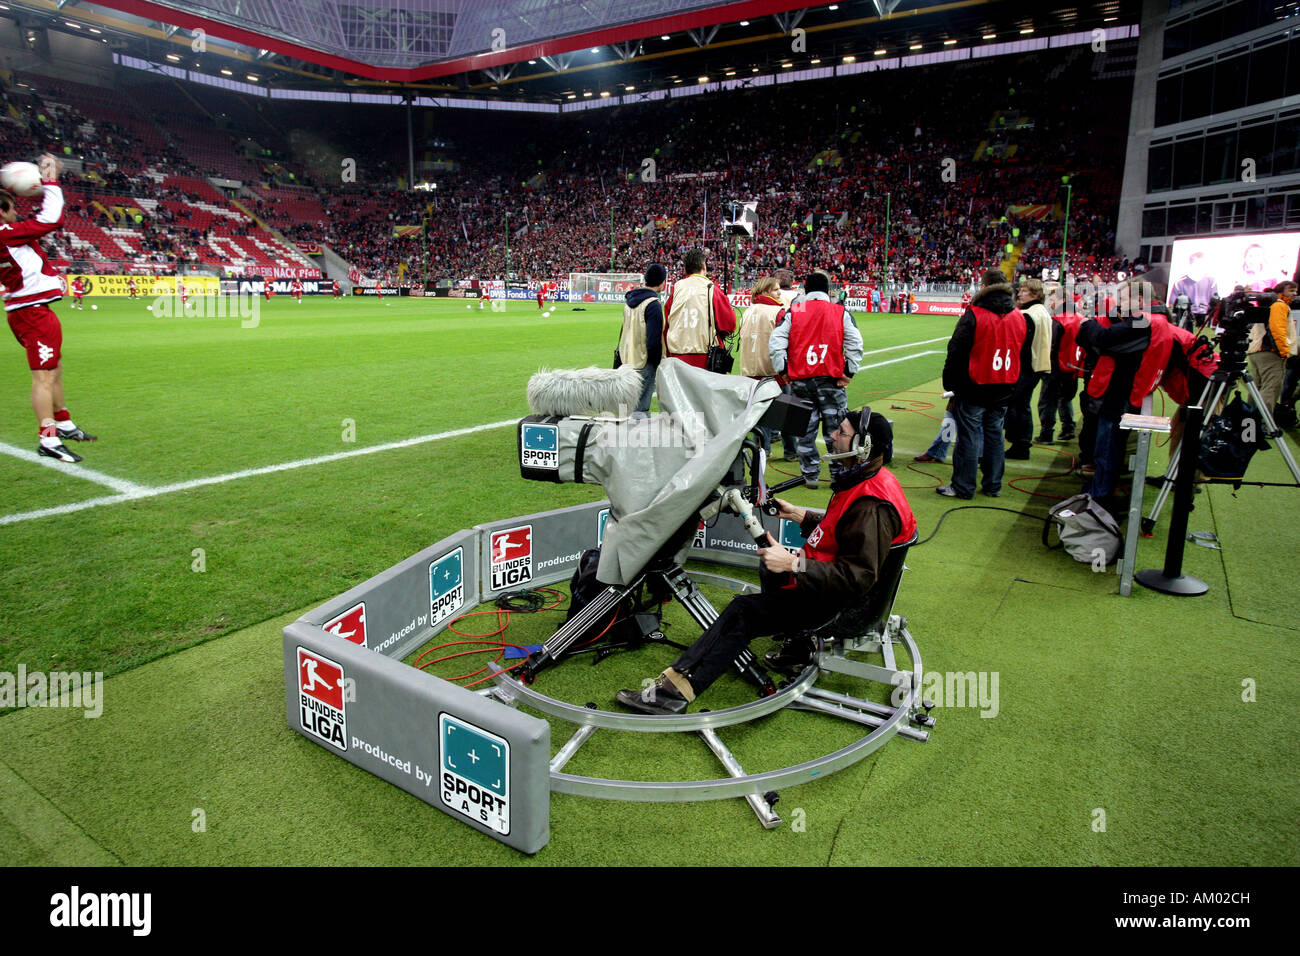 Cameraman at the soccer field in Kaiserslautern Stock Photo